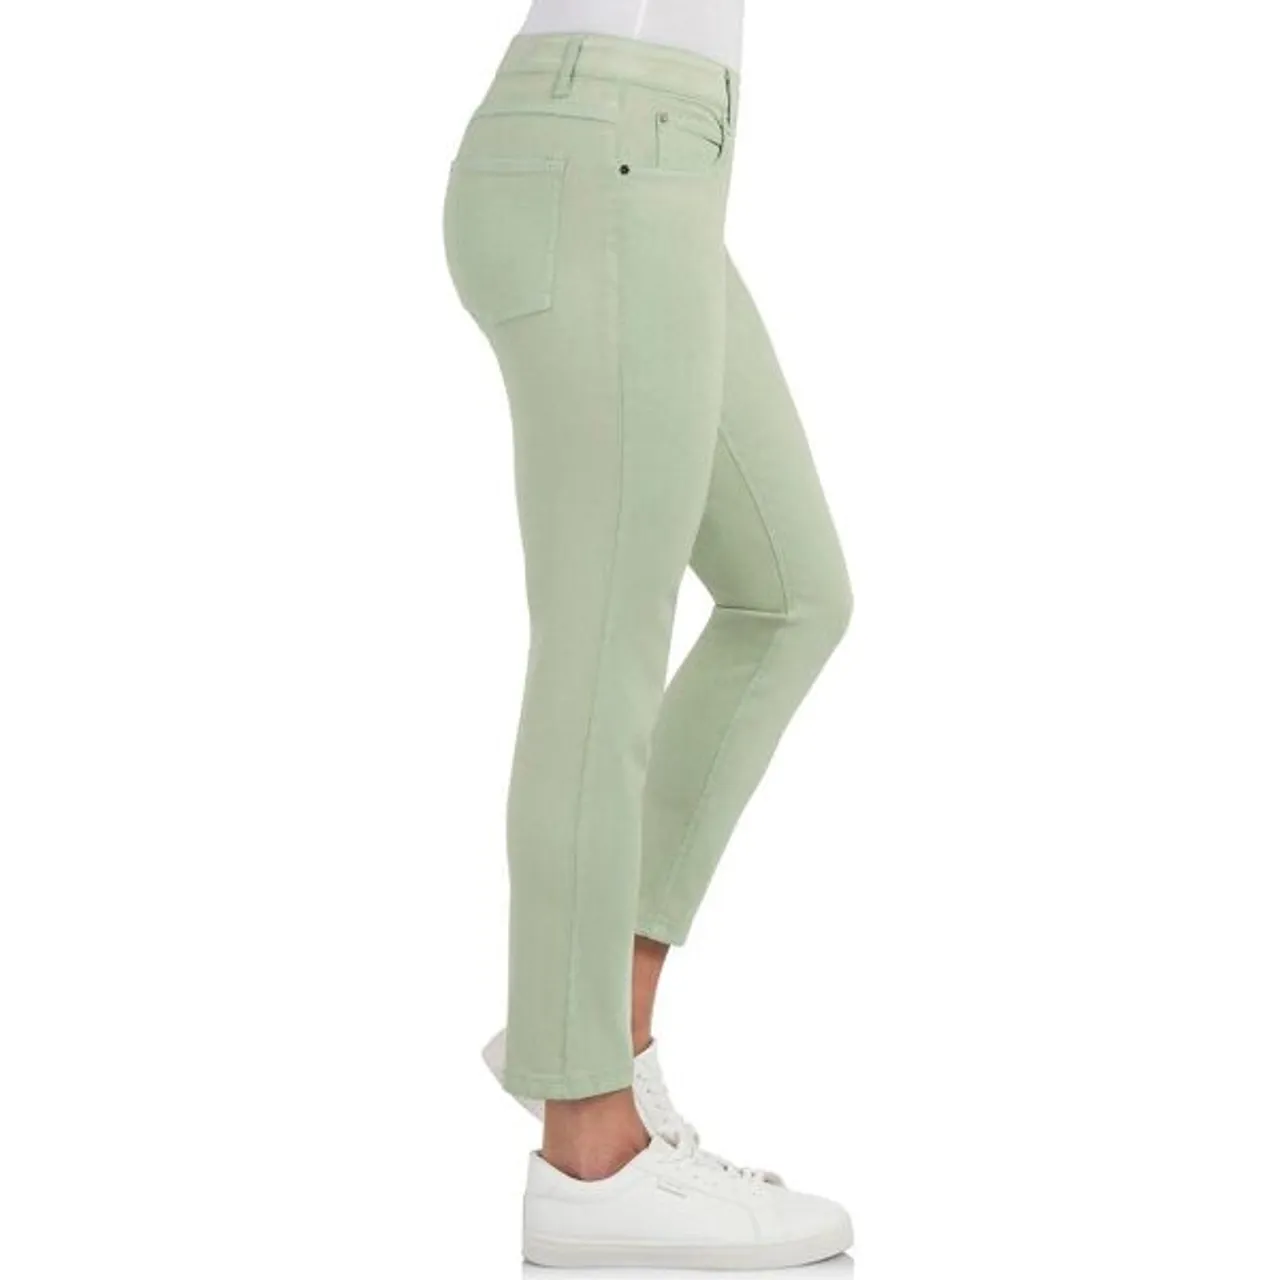 Ankle-Jeans WONDERJEANS "Ankle Slit" Gr. 36, Länge 27, grün (pale green) Damen Jeans Ankle 7/8